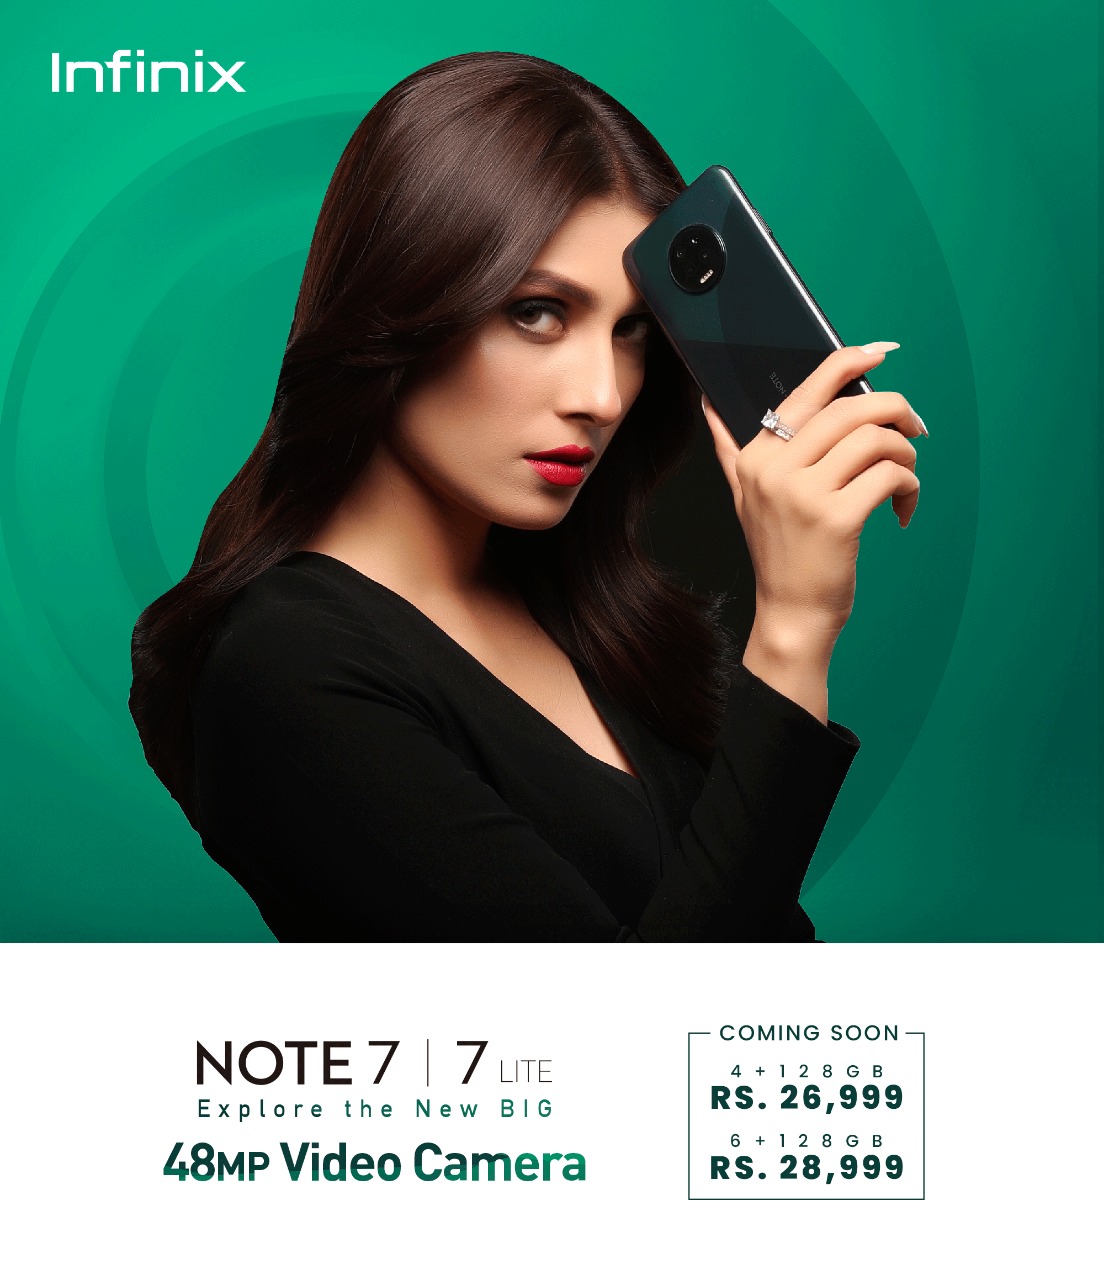 Infinix Announces Note 7: Explore the New Big with 48MP Quad Rear Video Camera